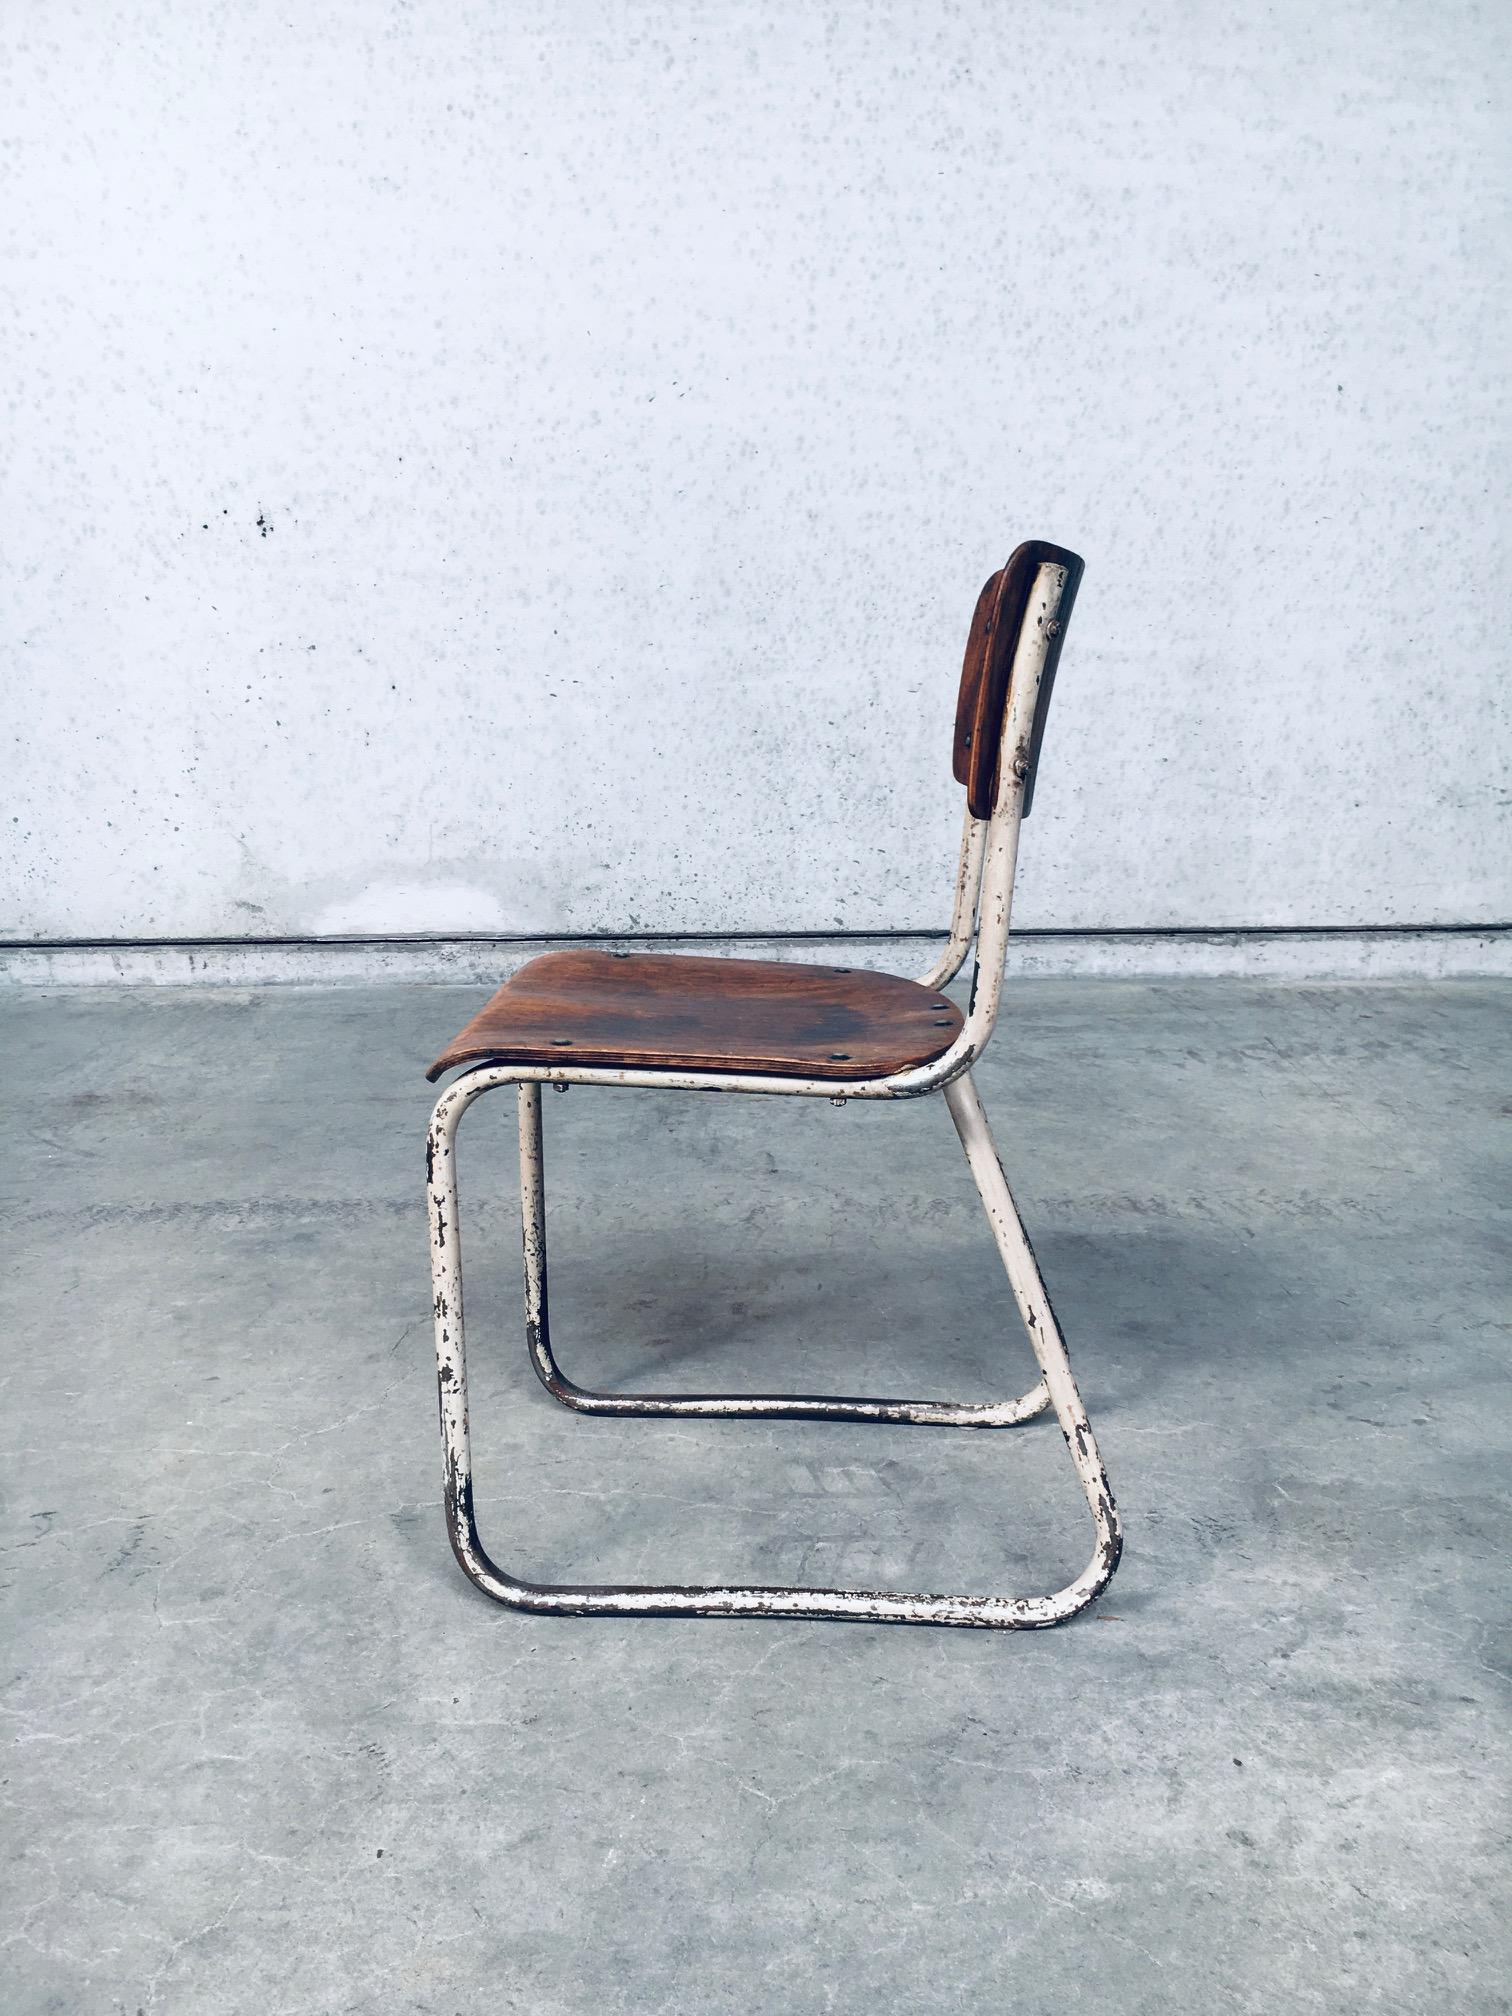 Steel Bauhaus Industrial Design School Chair, Germany 1940's